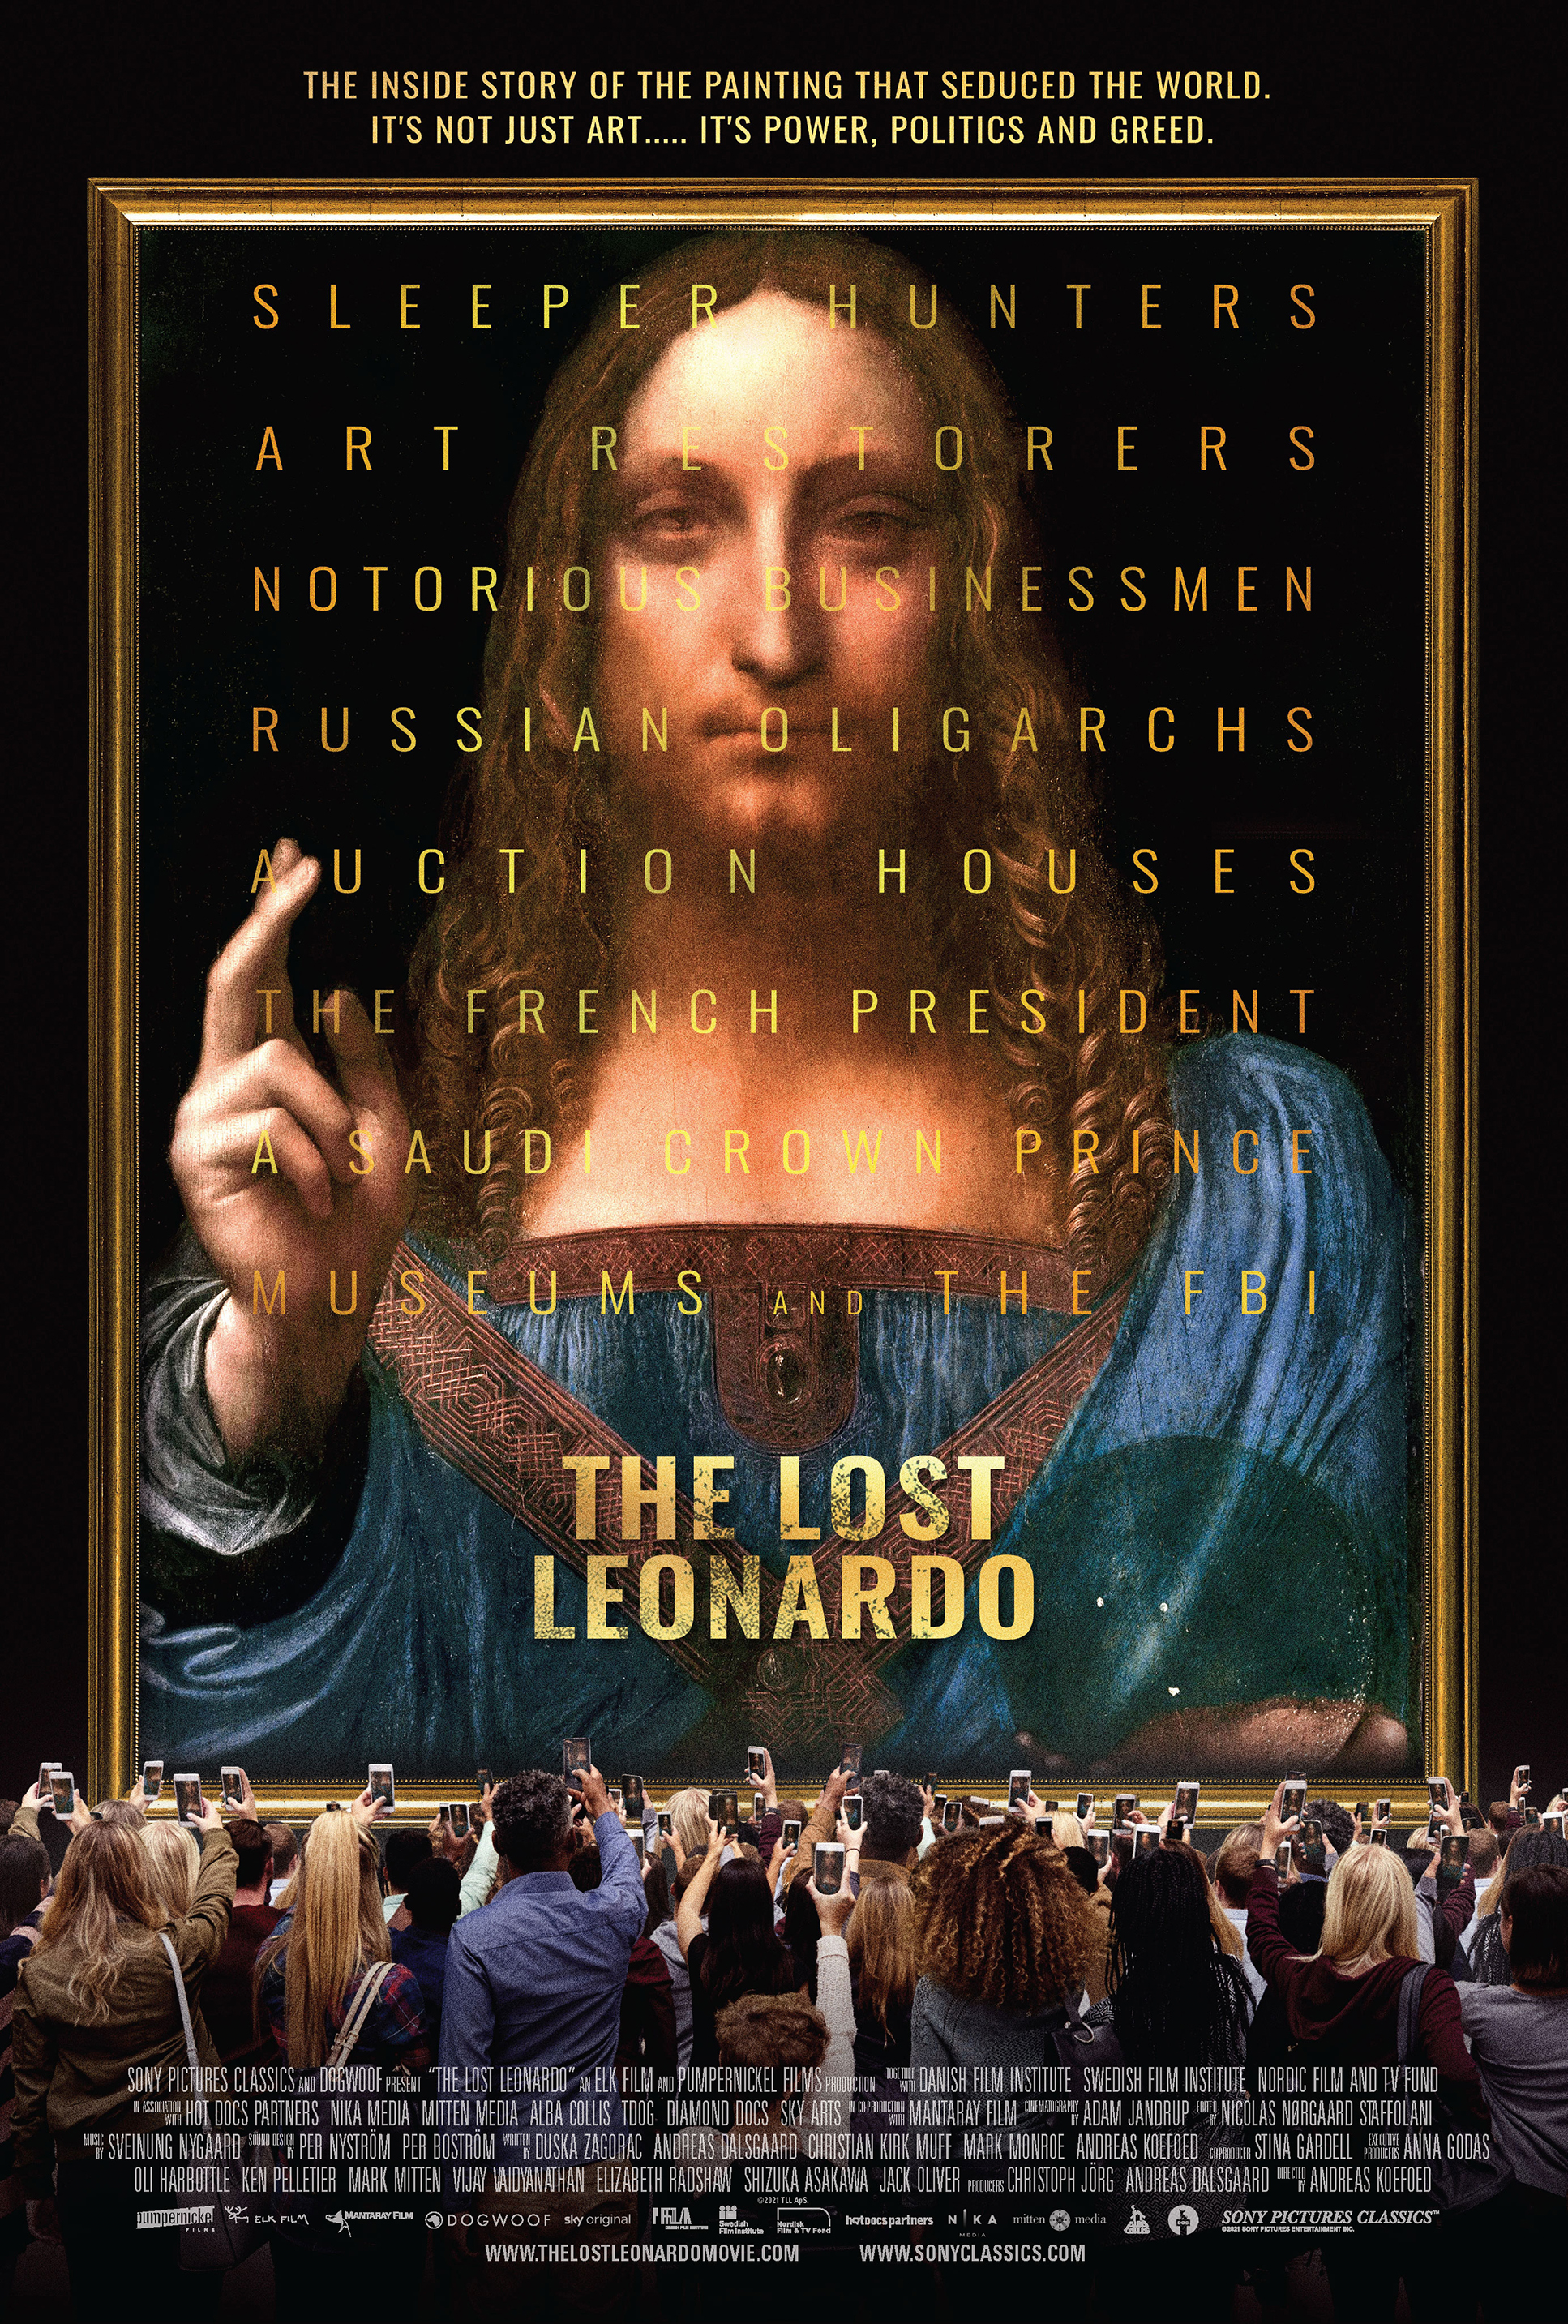 Poster for The Lost Leonardo